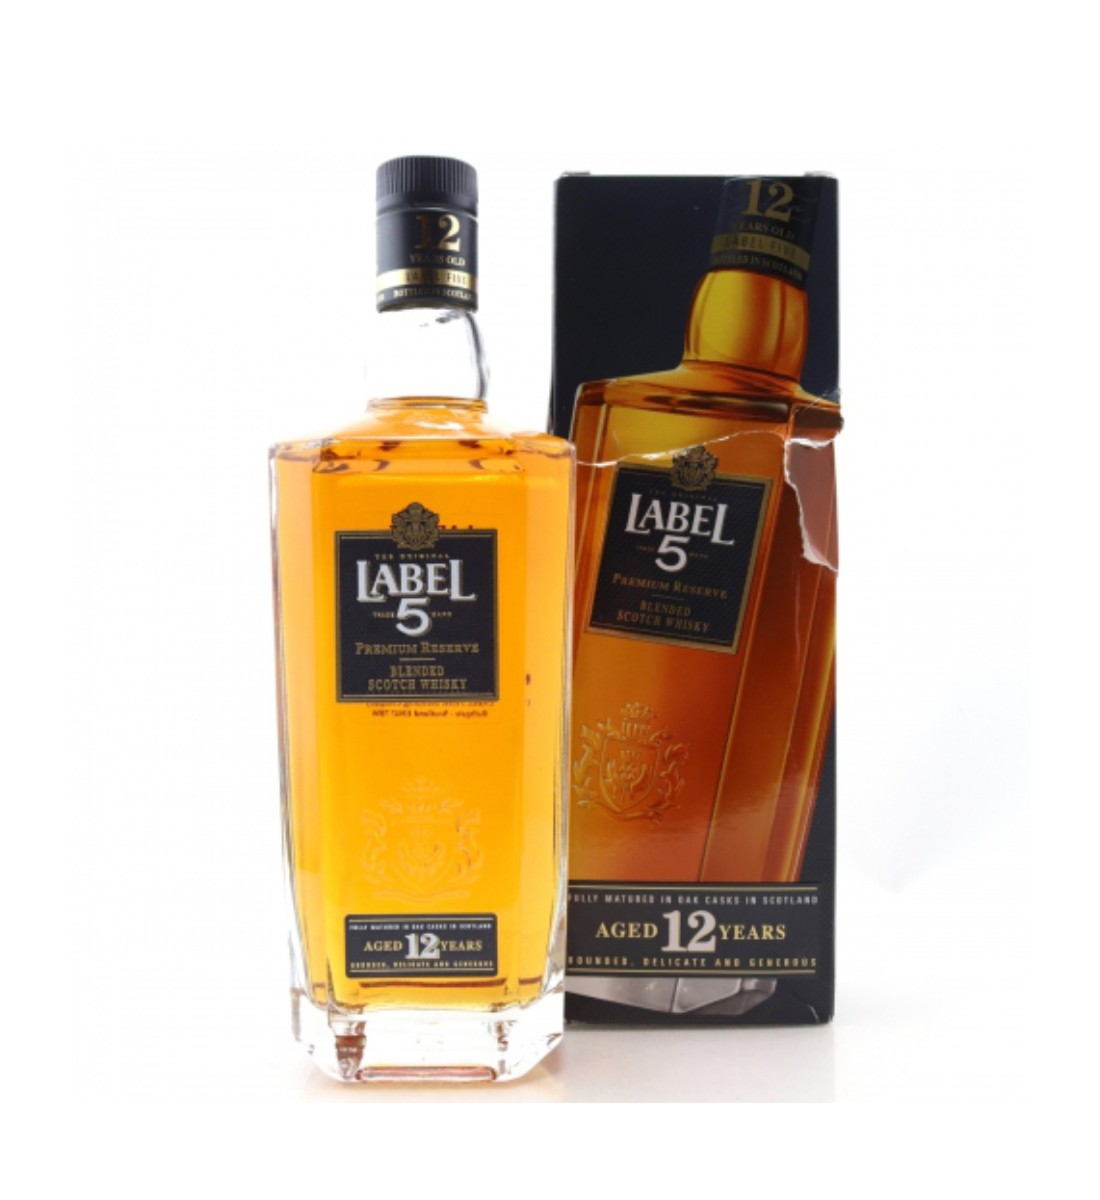 Label 5 Premium Reserve Whisky 12 ani 0.7L 0.7L